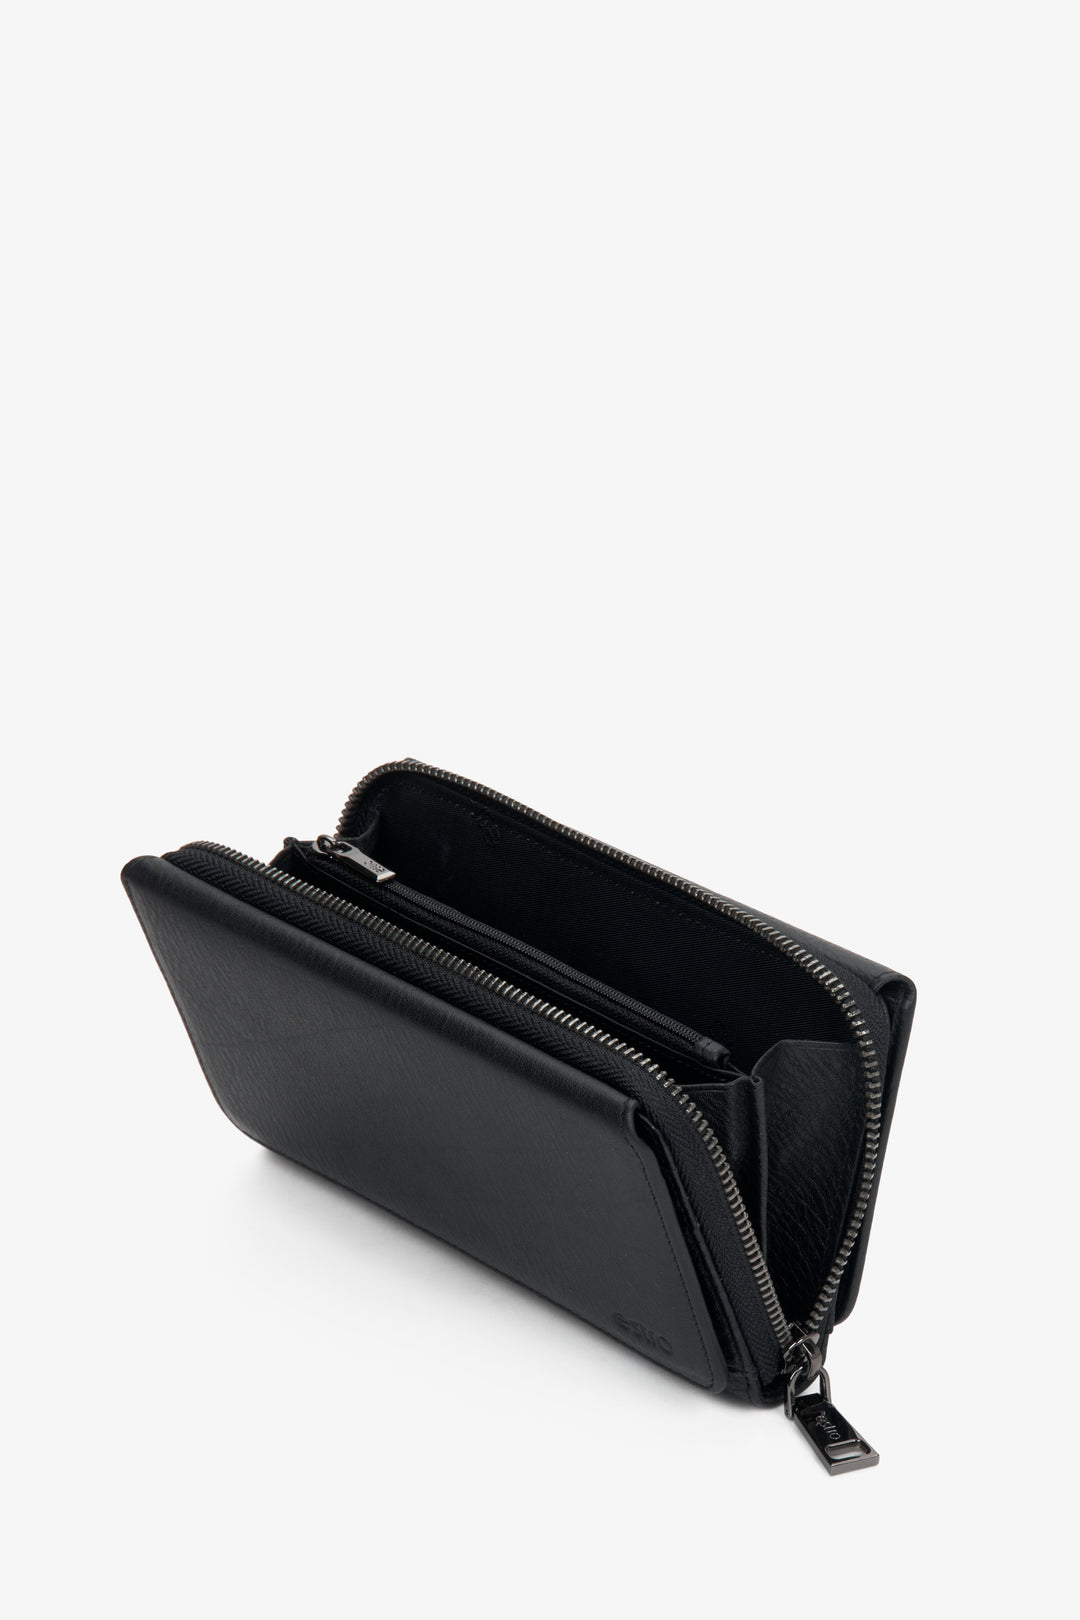 Estro large men's wallet made of genuine leather.